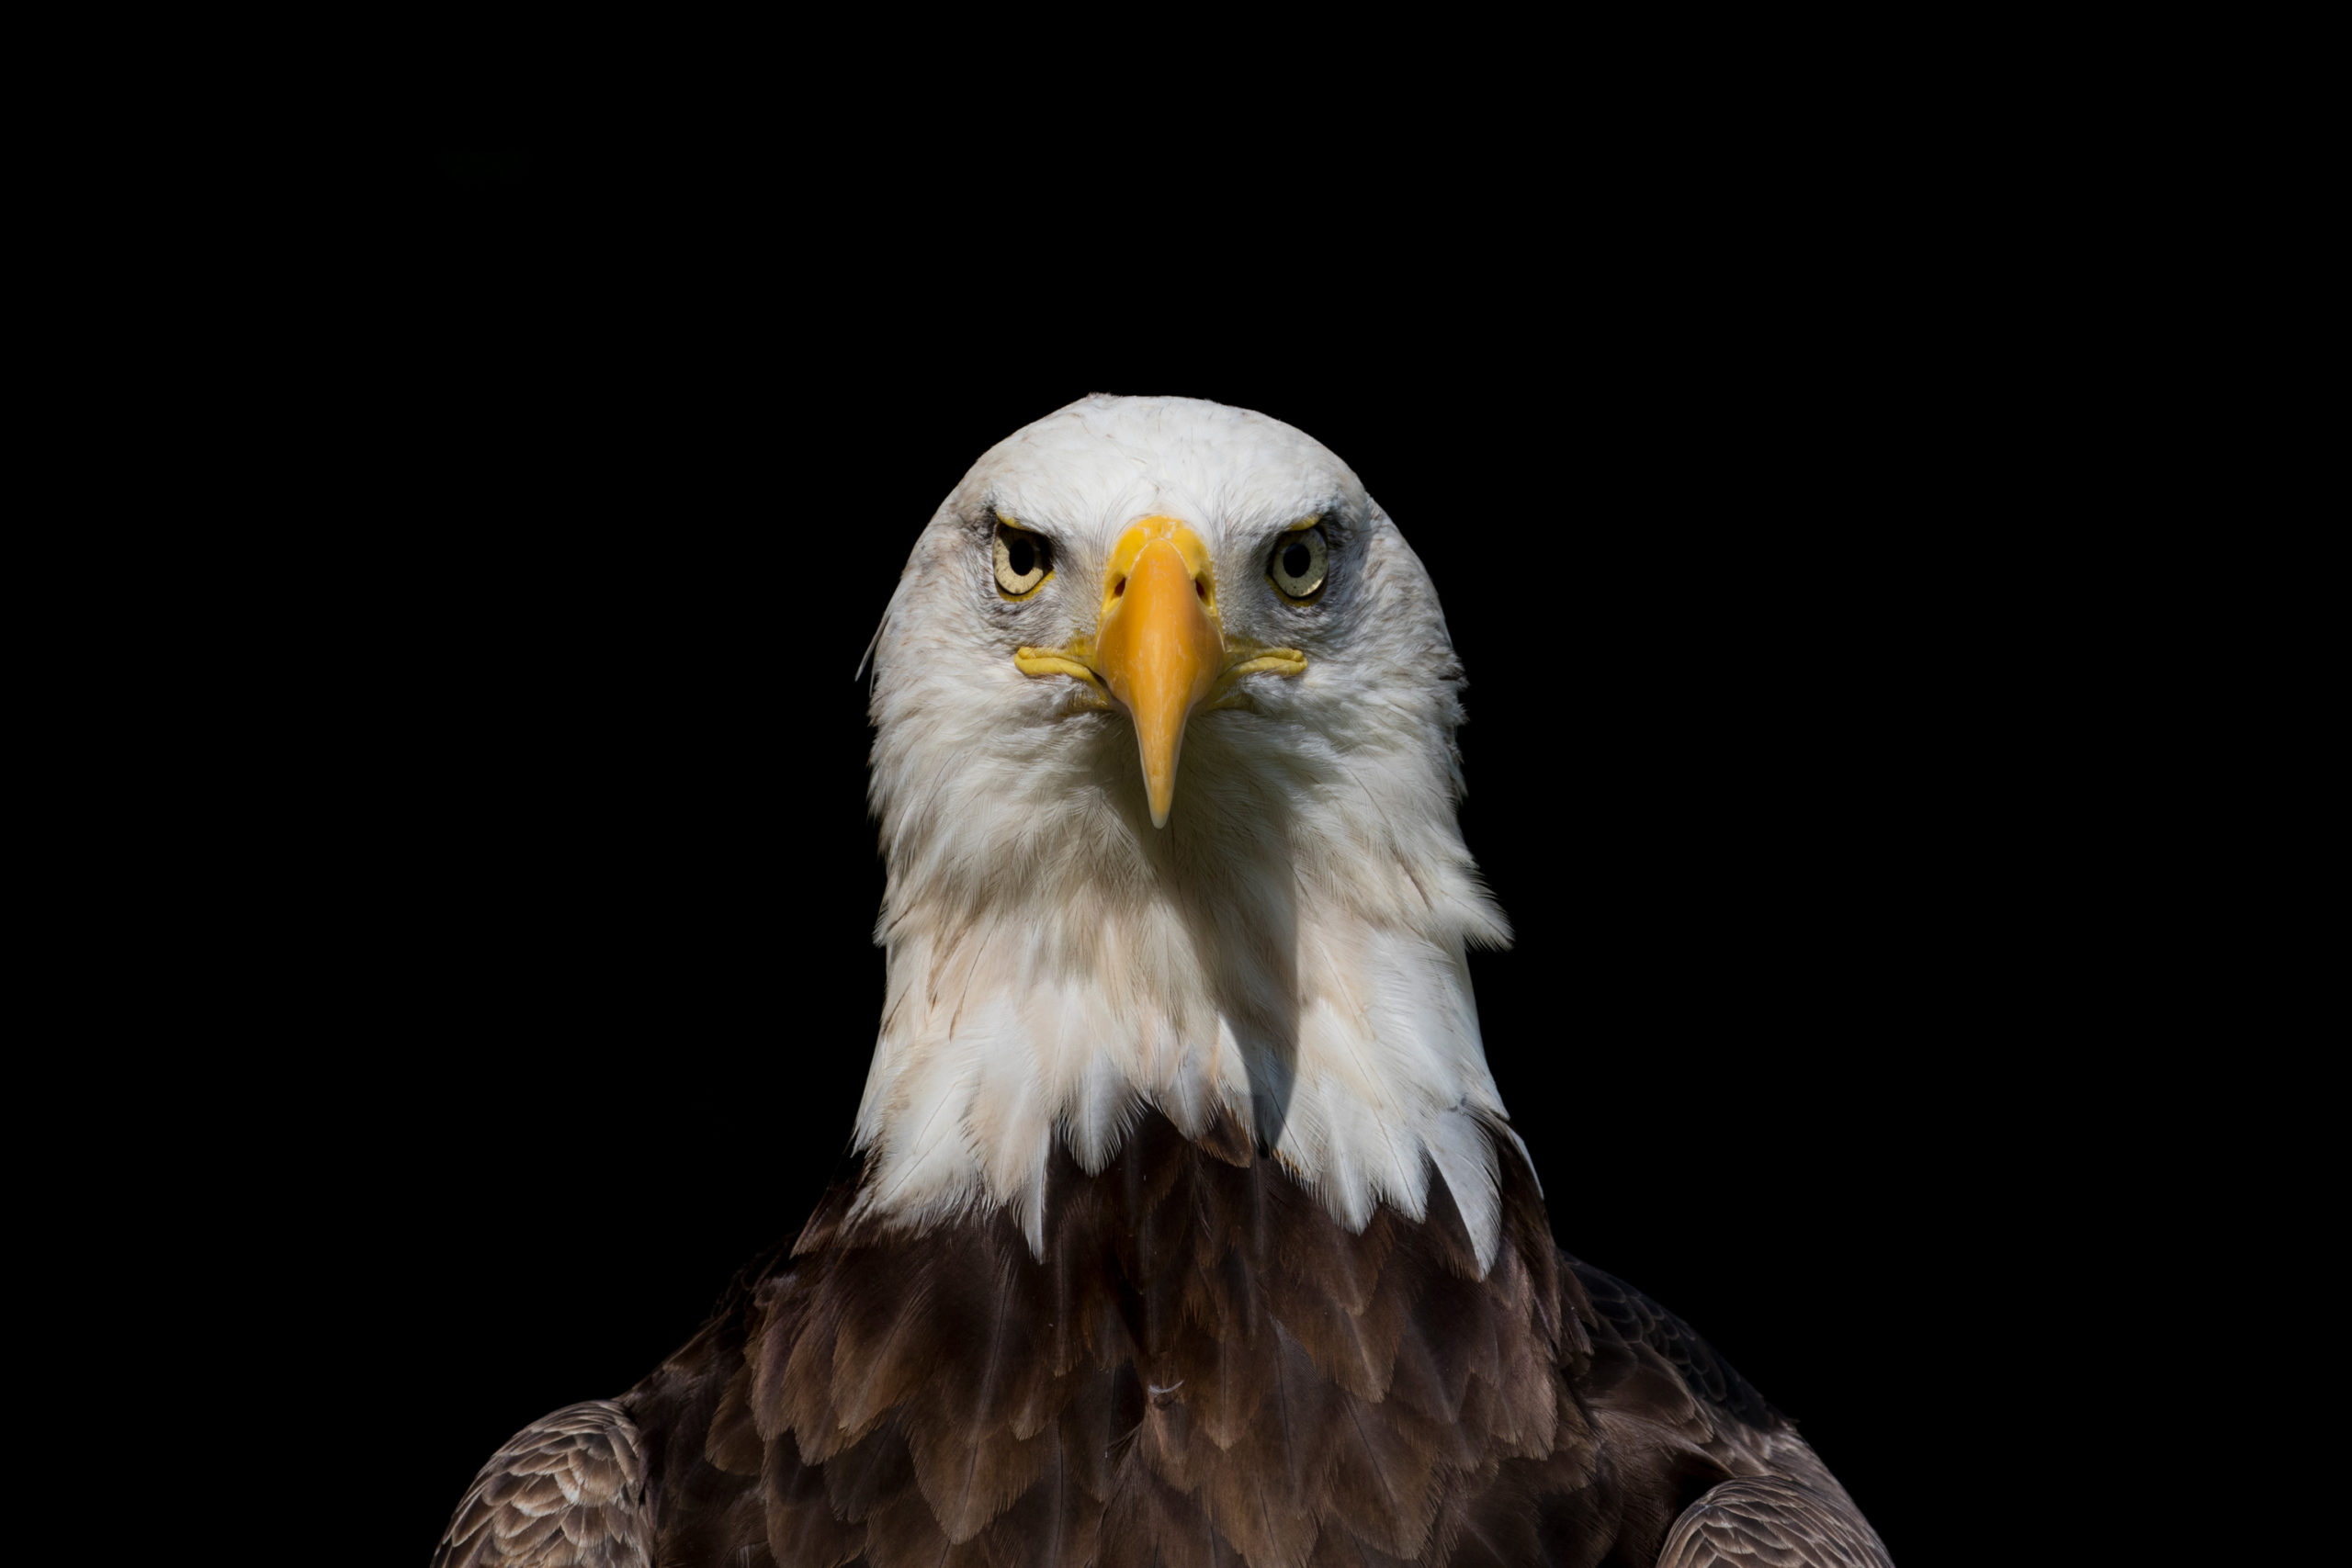 MEET OUR BIRDS  American Eagle Foundation